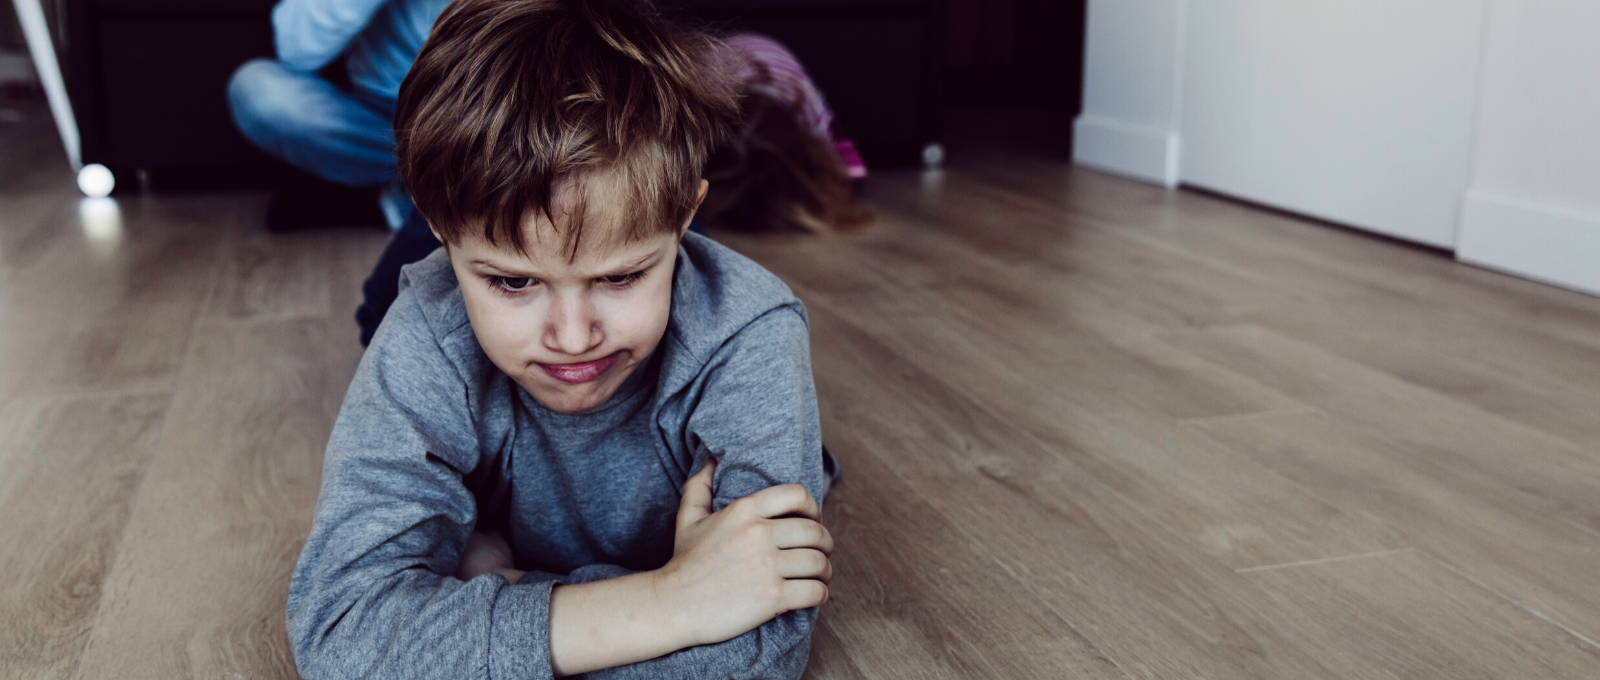 Child tantrumming stressed on floor